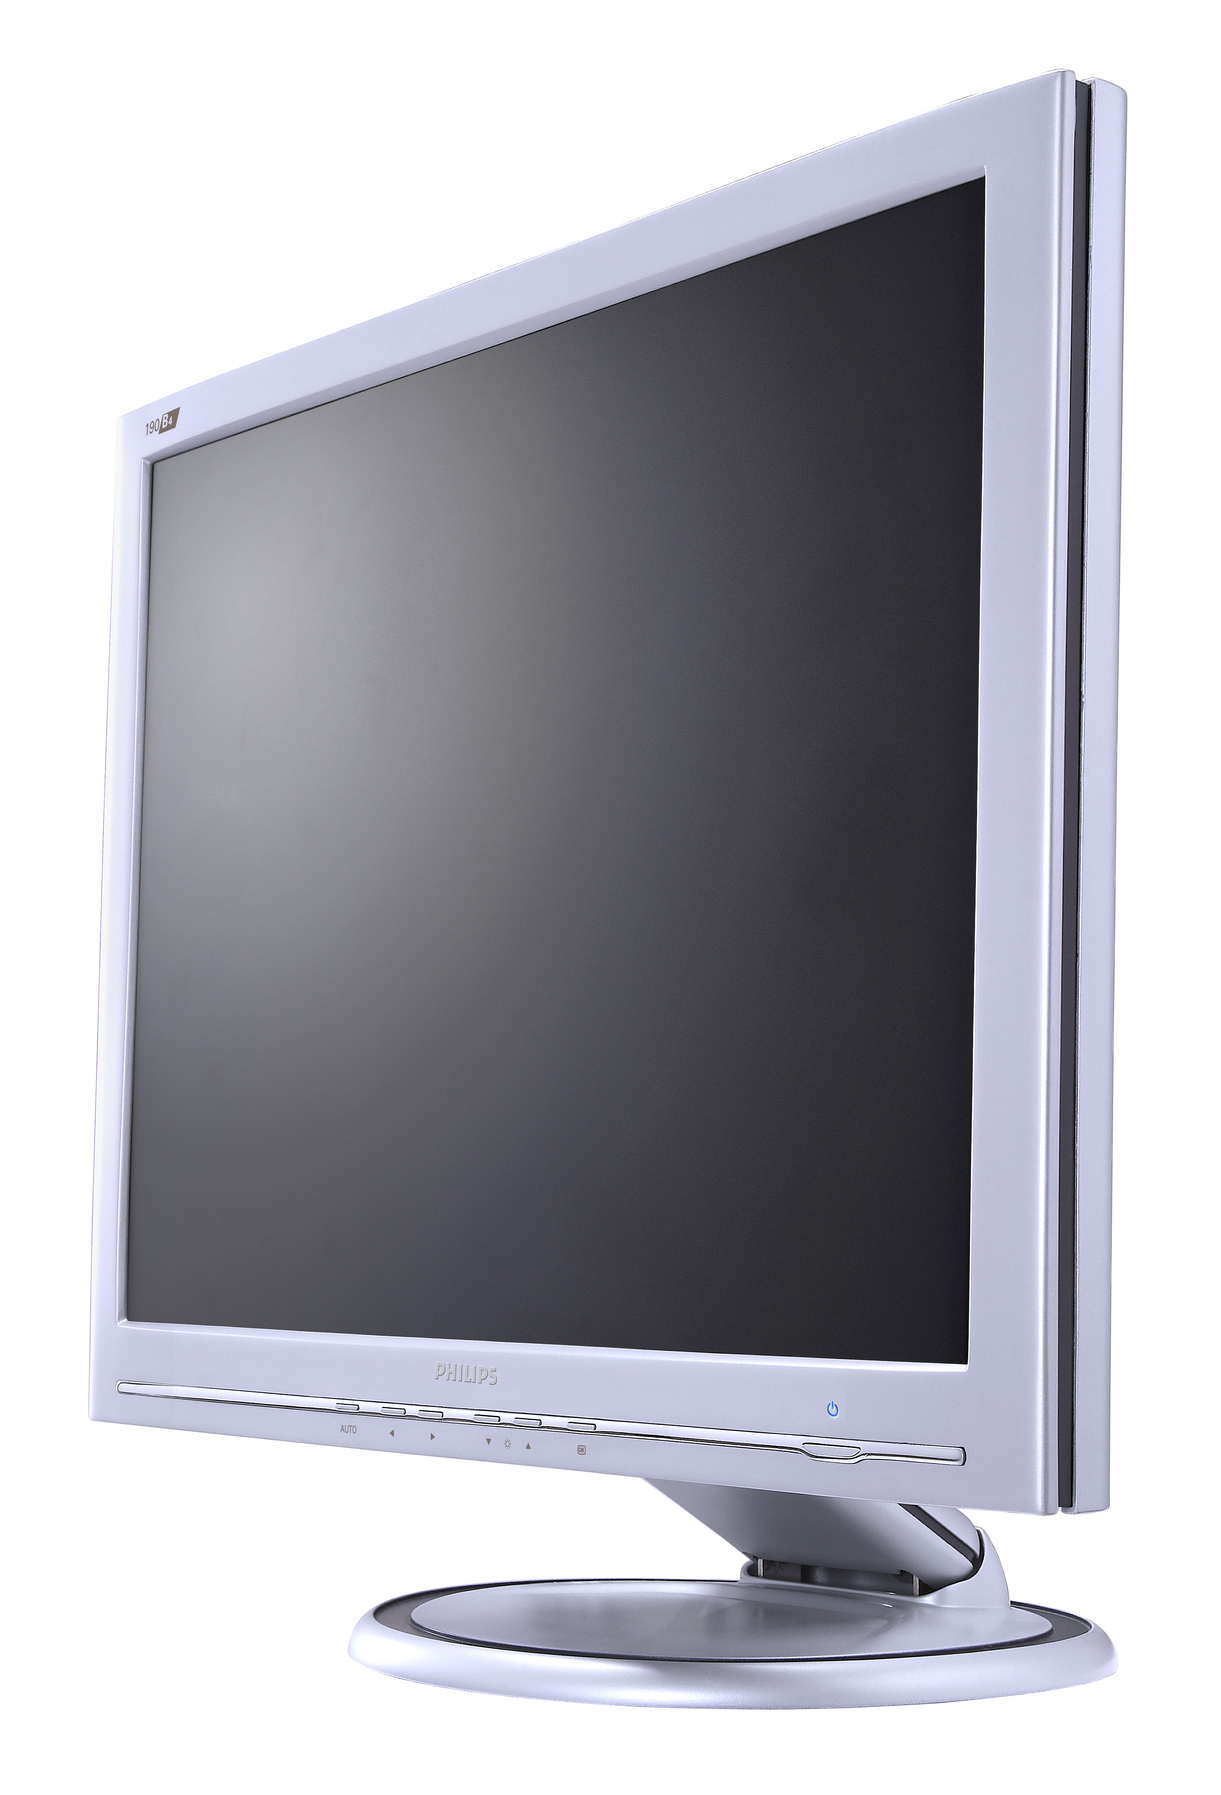 Monitor Philips 190B5 LCD, 19 inch, 1280 x 1024, VGA, DVI, 16.7 milioane de culori